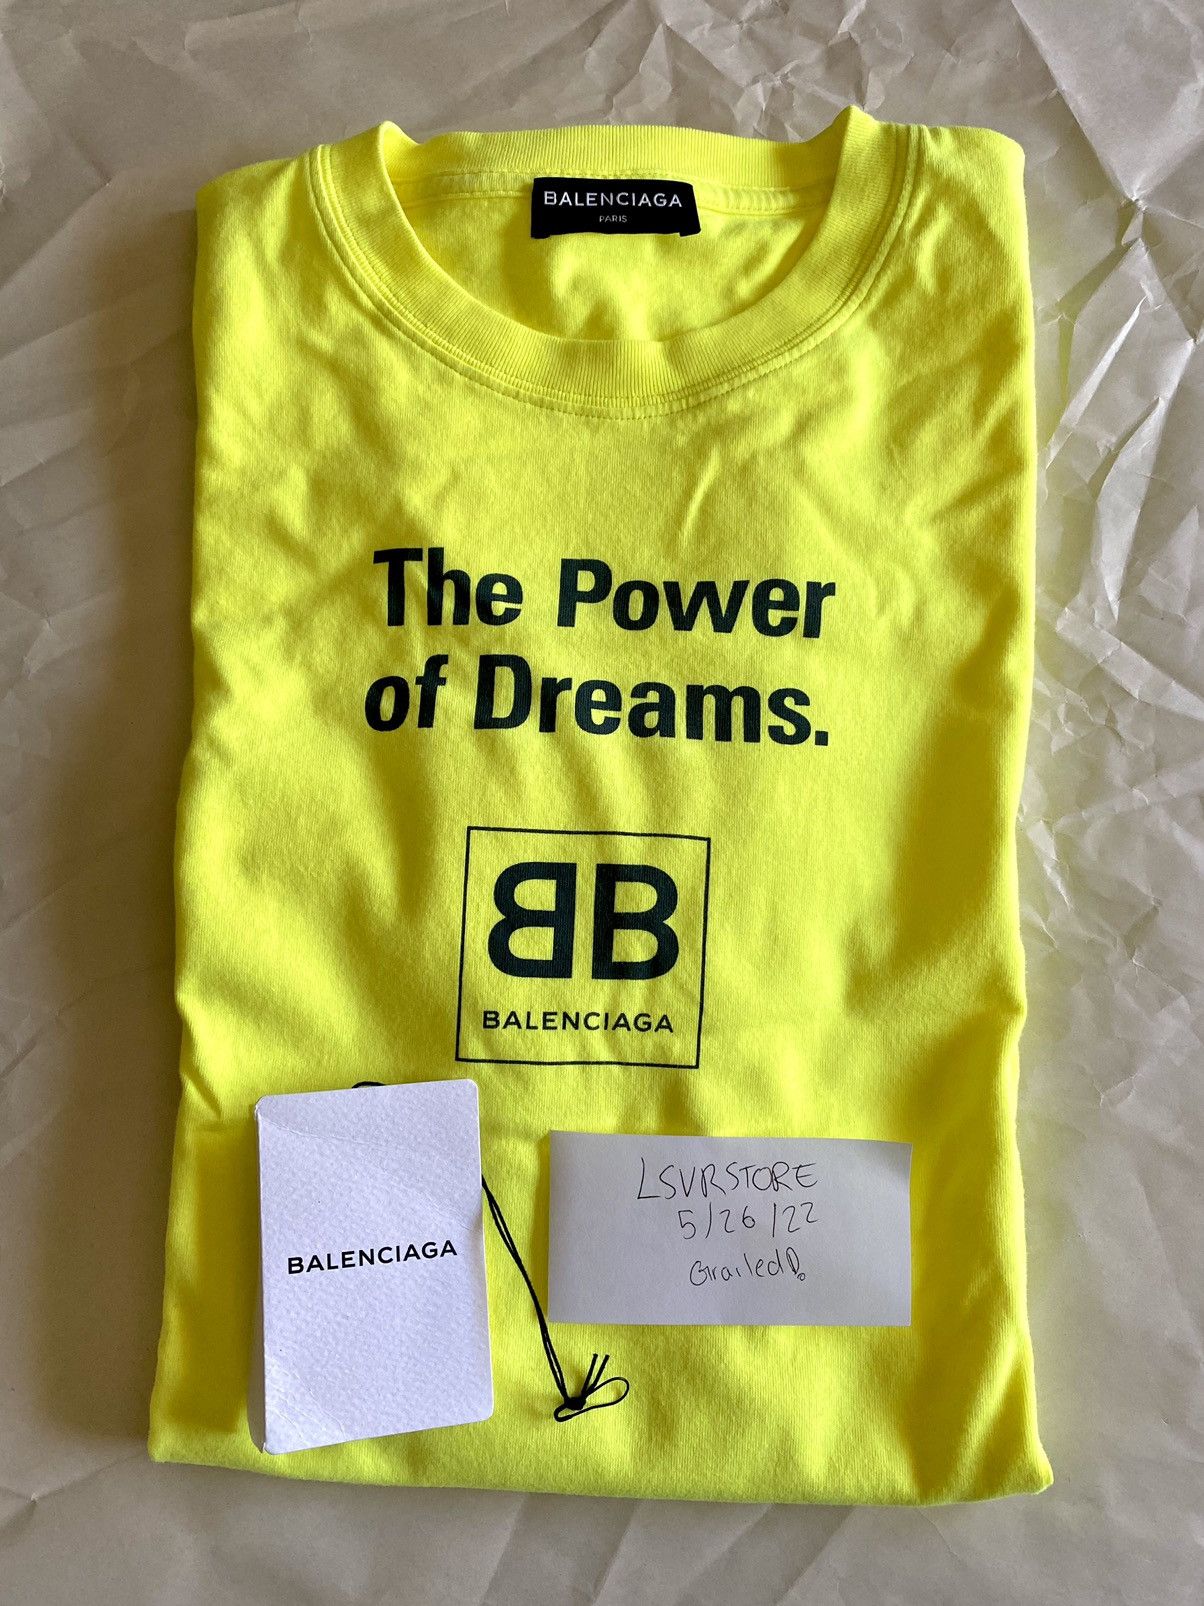 fedt nok leksikon automat Balenciaga The Power of Dreams Tee - Medium | Grailed